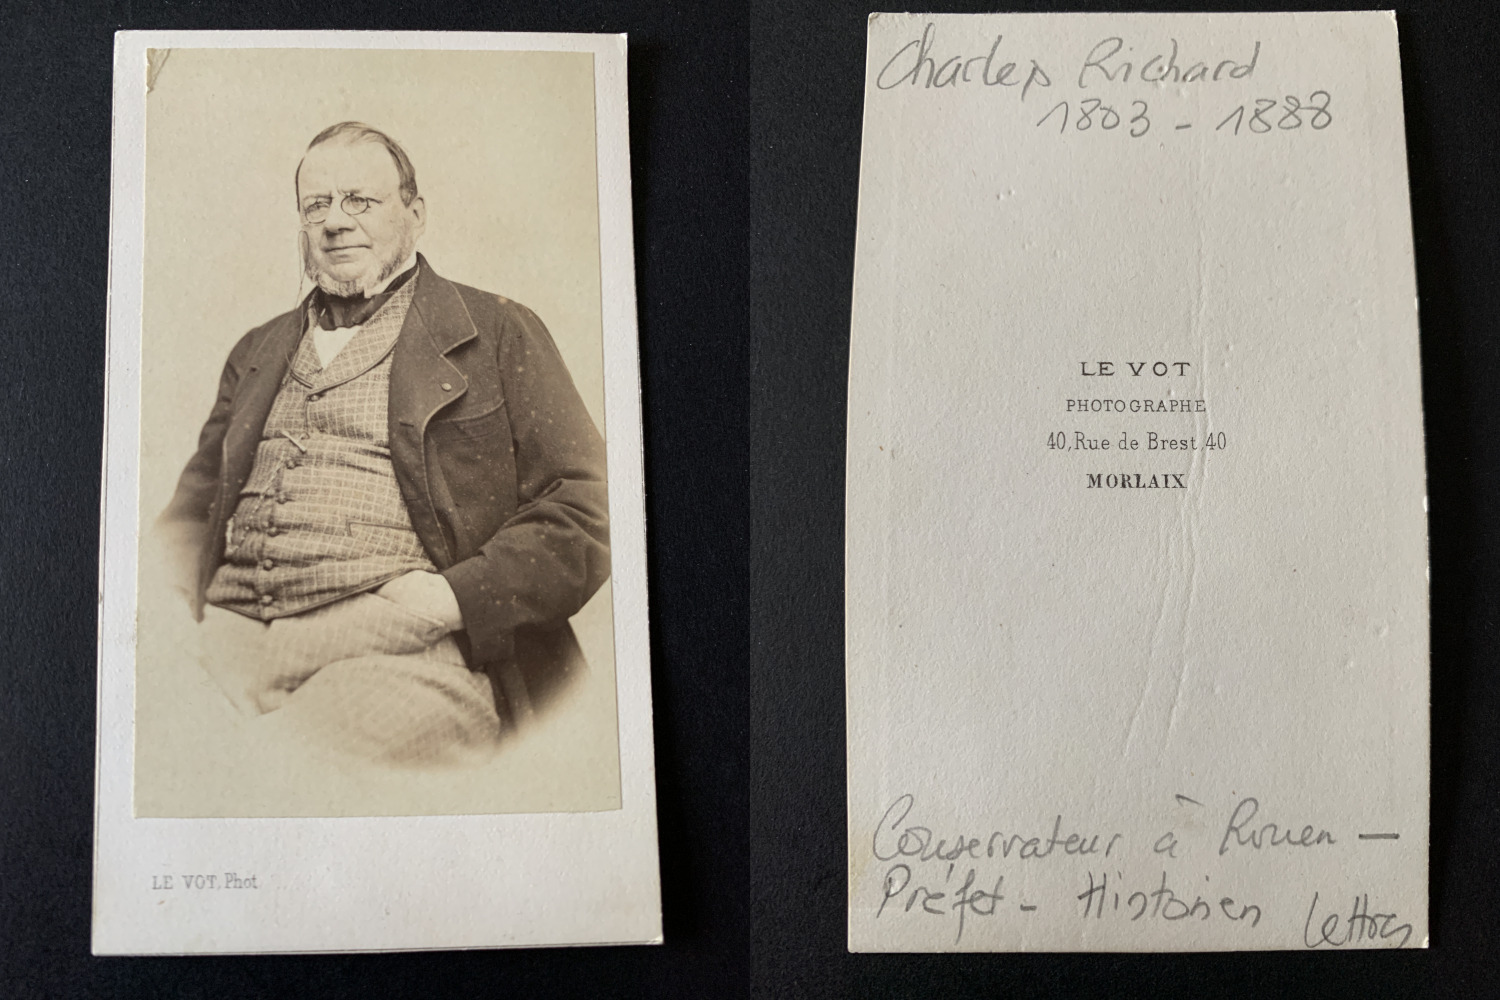 Le Vot, Morlaix, Charles Richard, Historian Vintage Albumen Print CDV. 1803_1